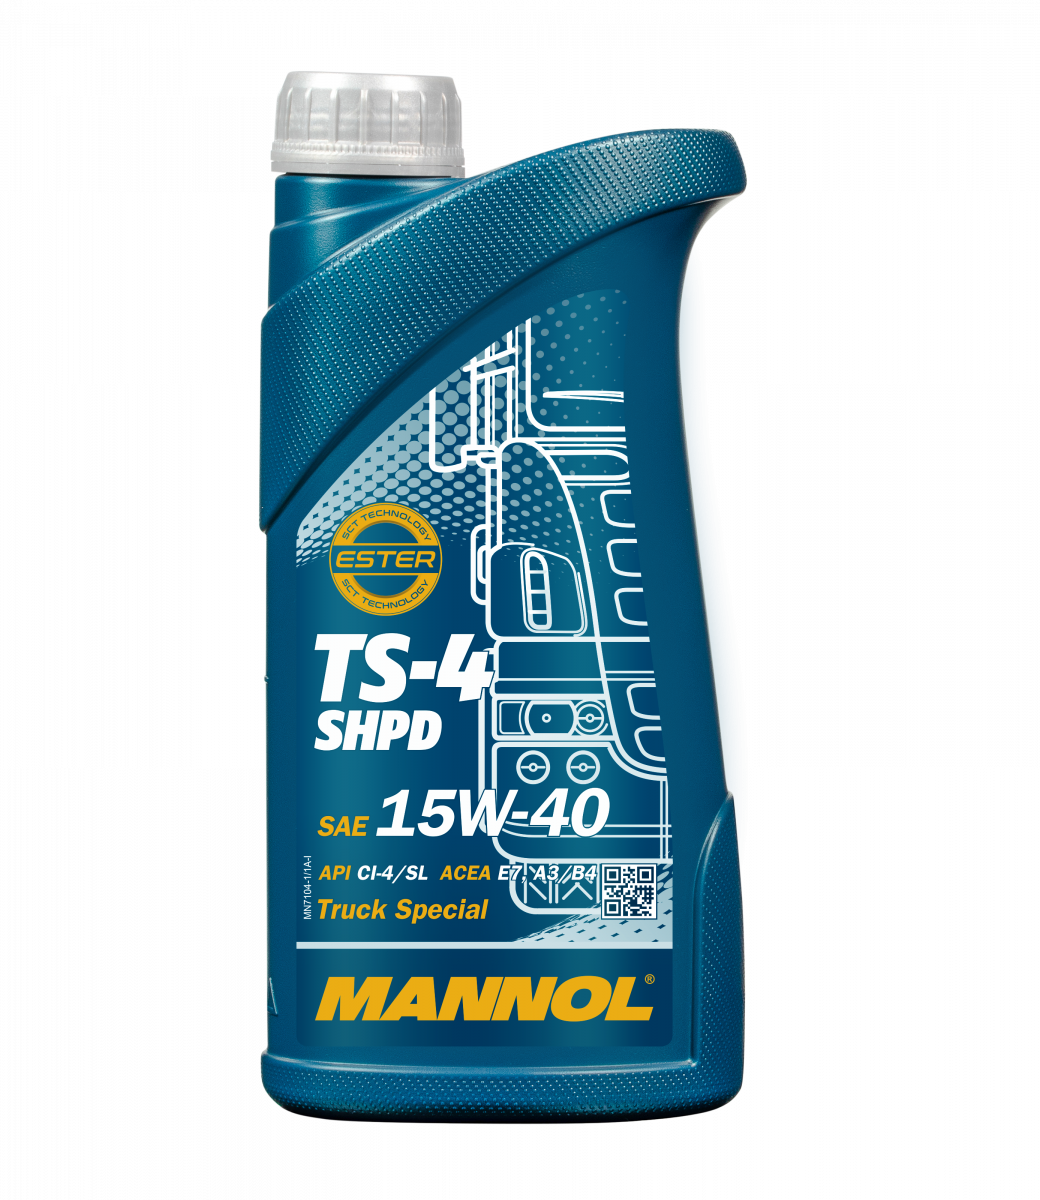 15W-40 Mannol 7104 TS-4 SHPD Extra Motoröl 1 Liter